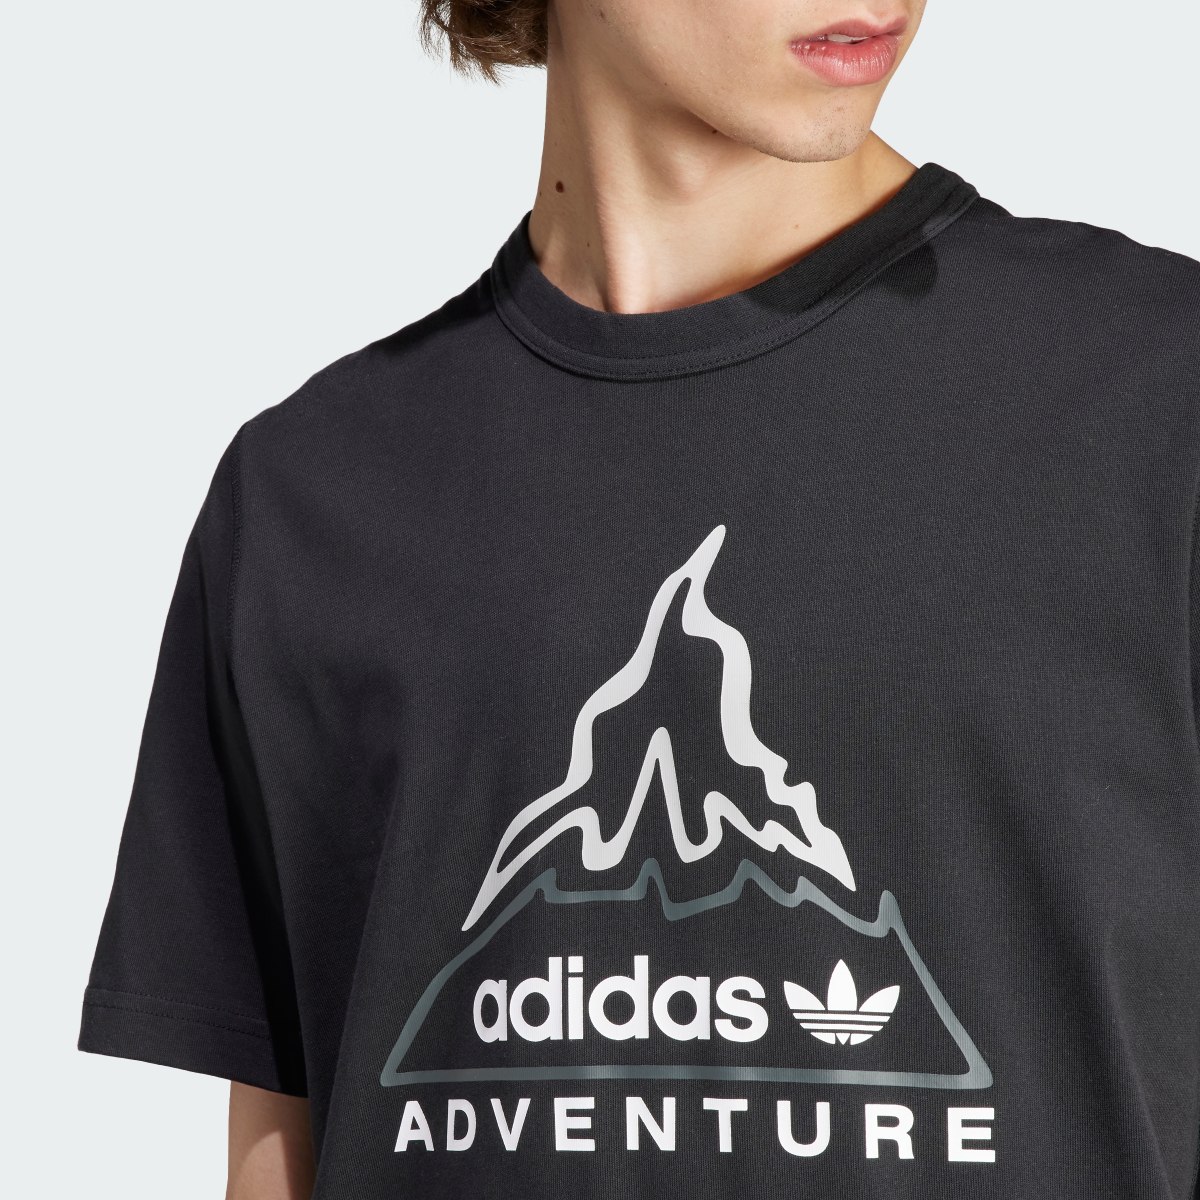 Adidas Adventure Graphic Tee. 6